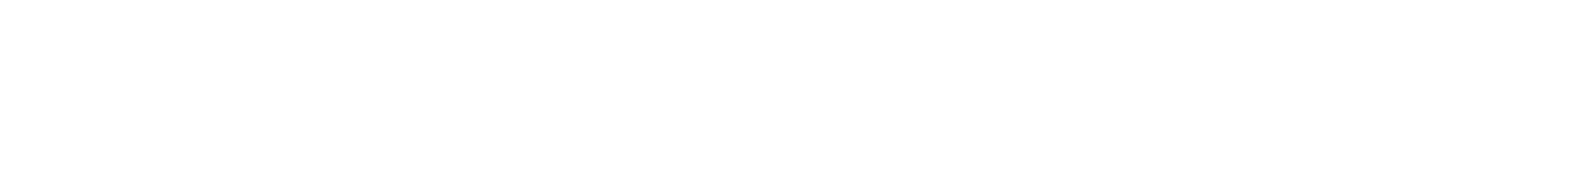 spentys-logo